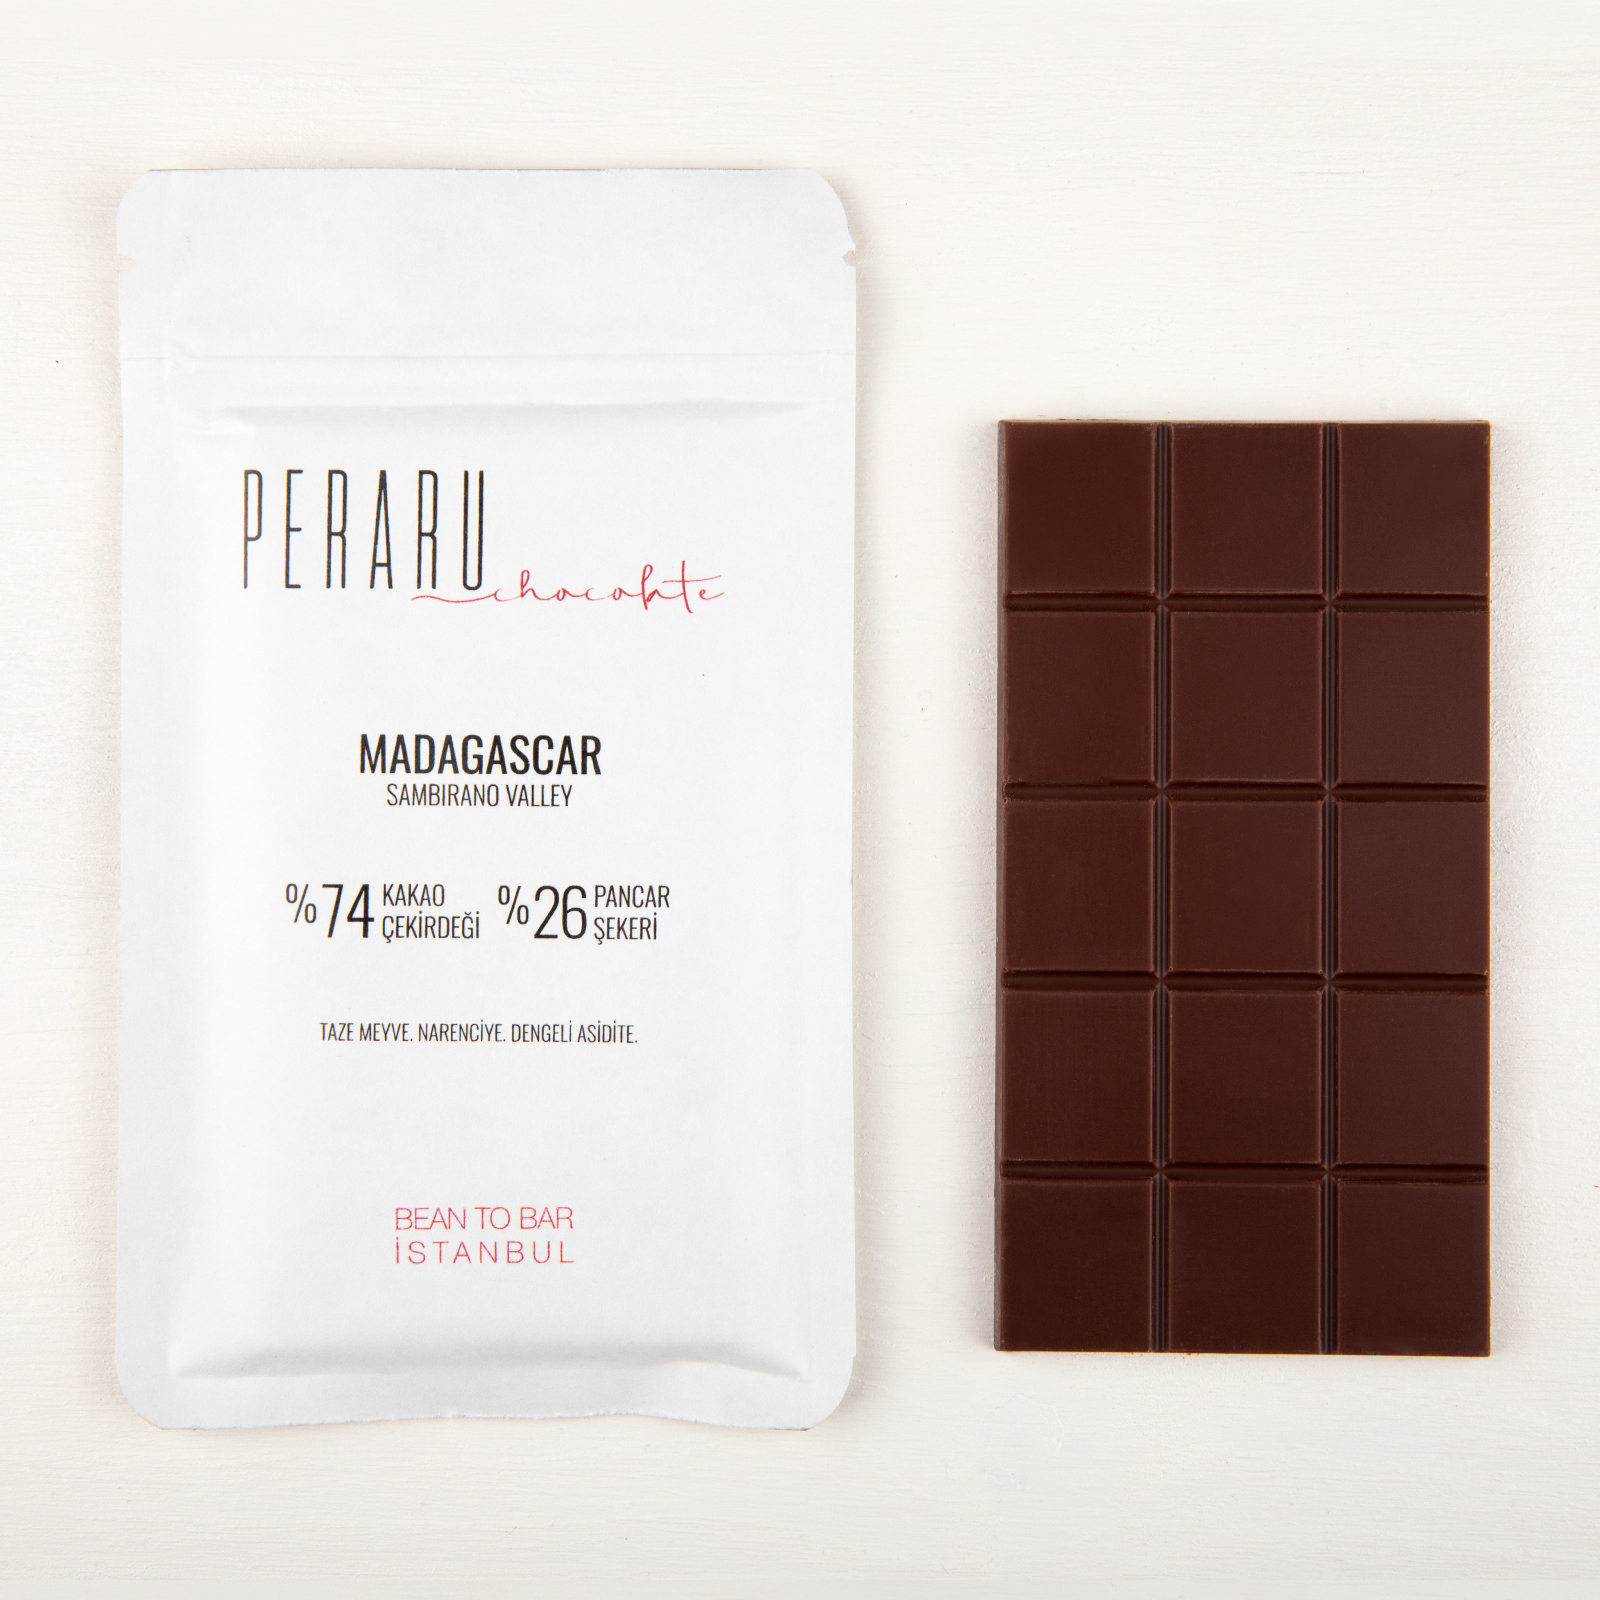 Bean to Bar chocolate MADAGASCAR 74% dark